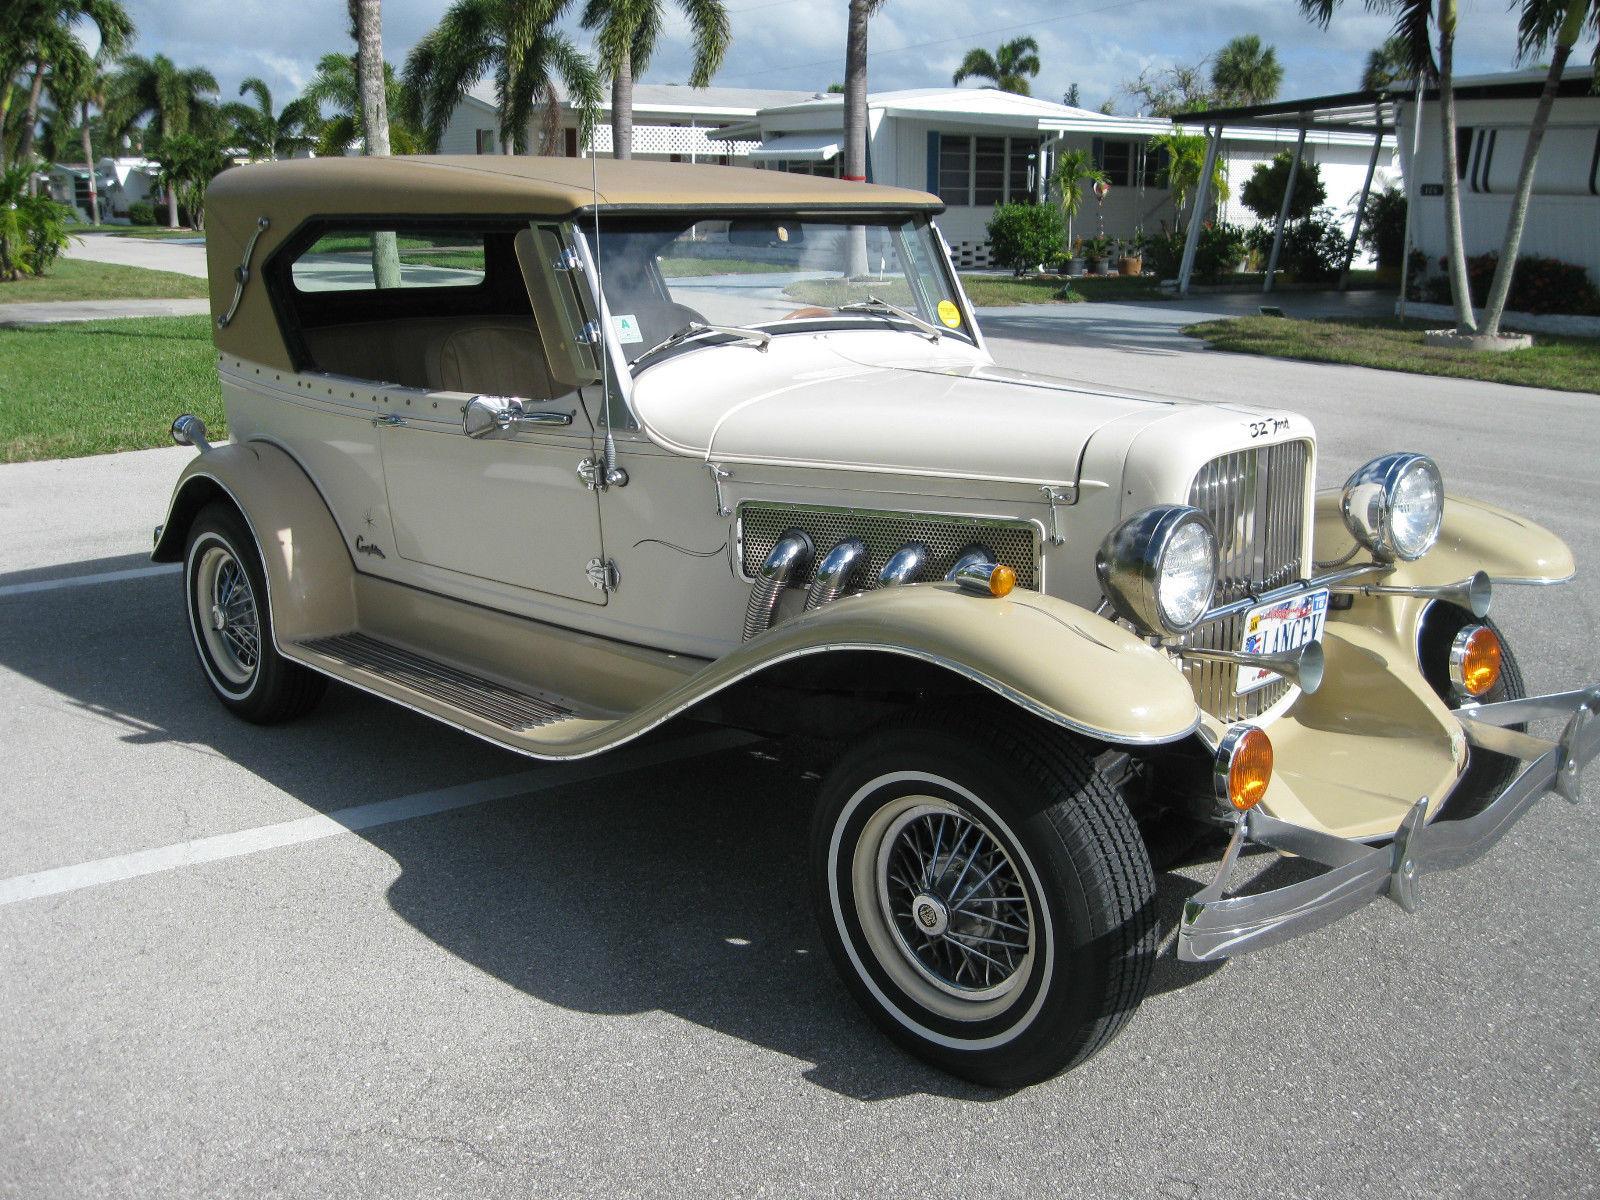 Model cars replicas ford